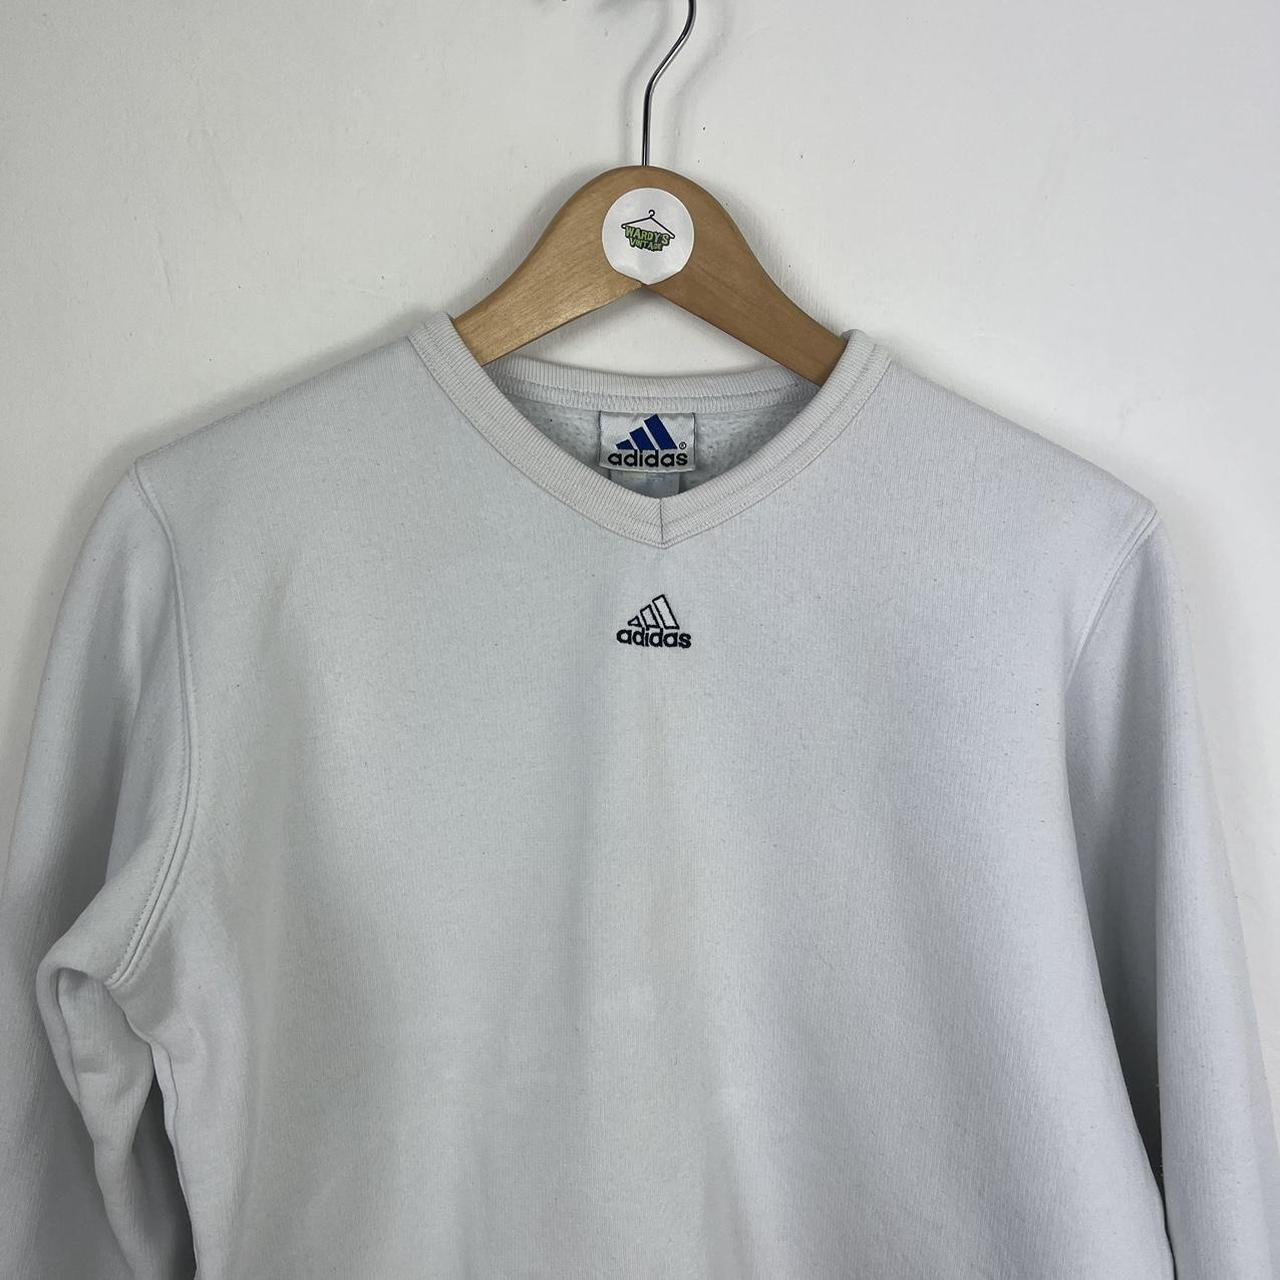 Adidas white sweatshirt small